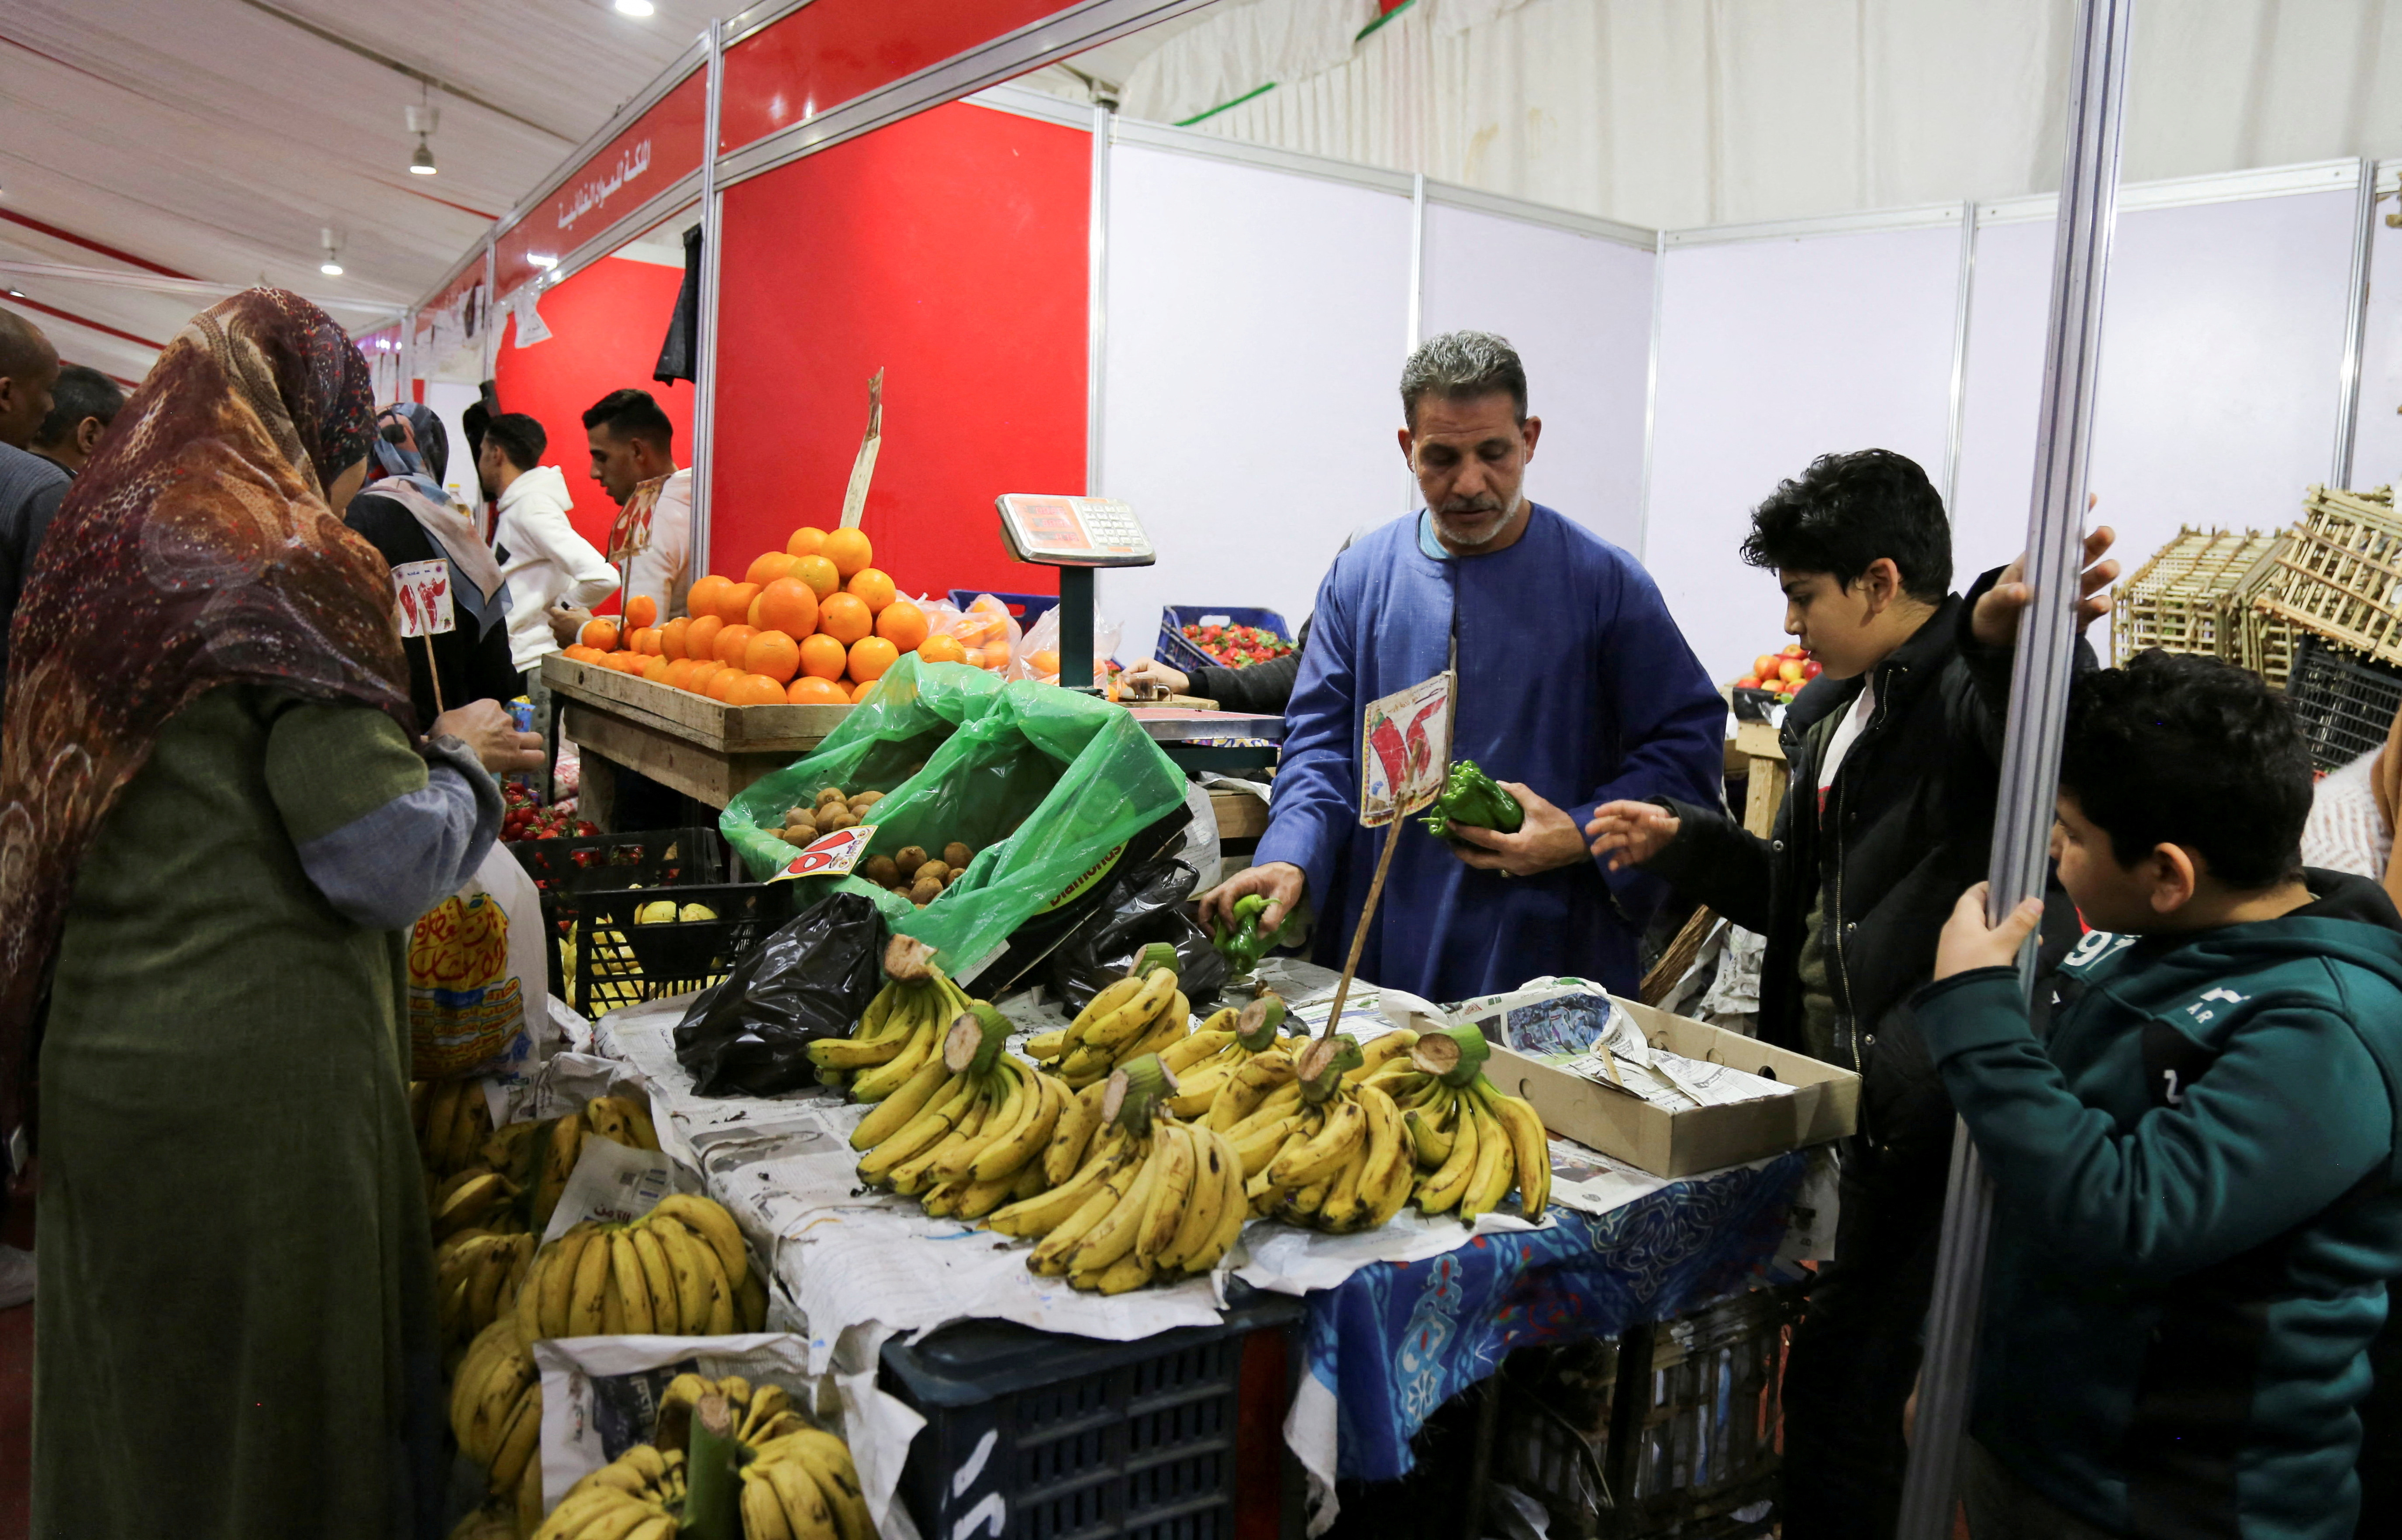 Discount markets pop-up across Egypt amid financial struggle